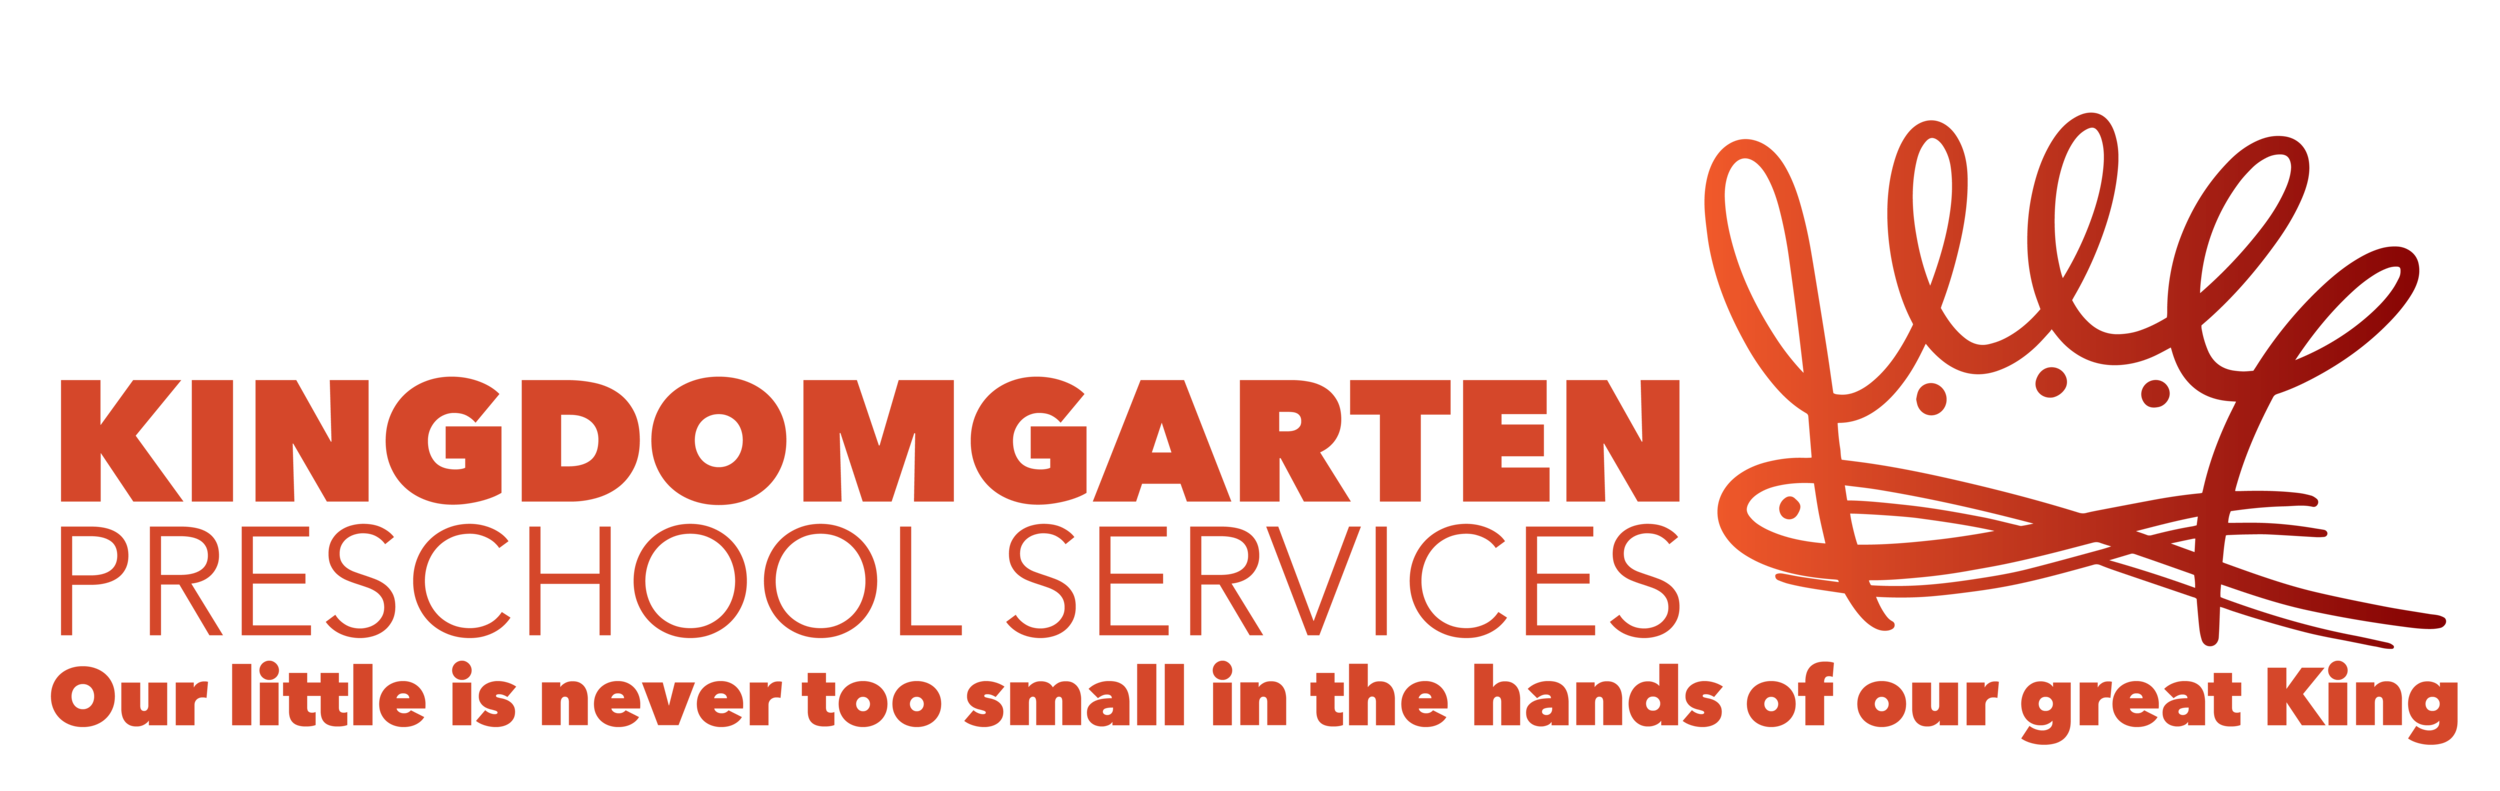 Kingdomgarten Preschool Services